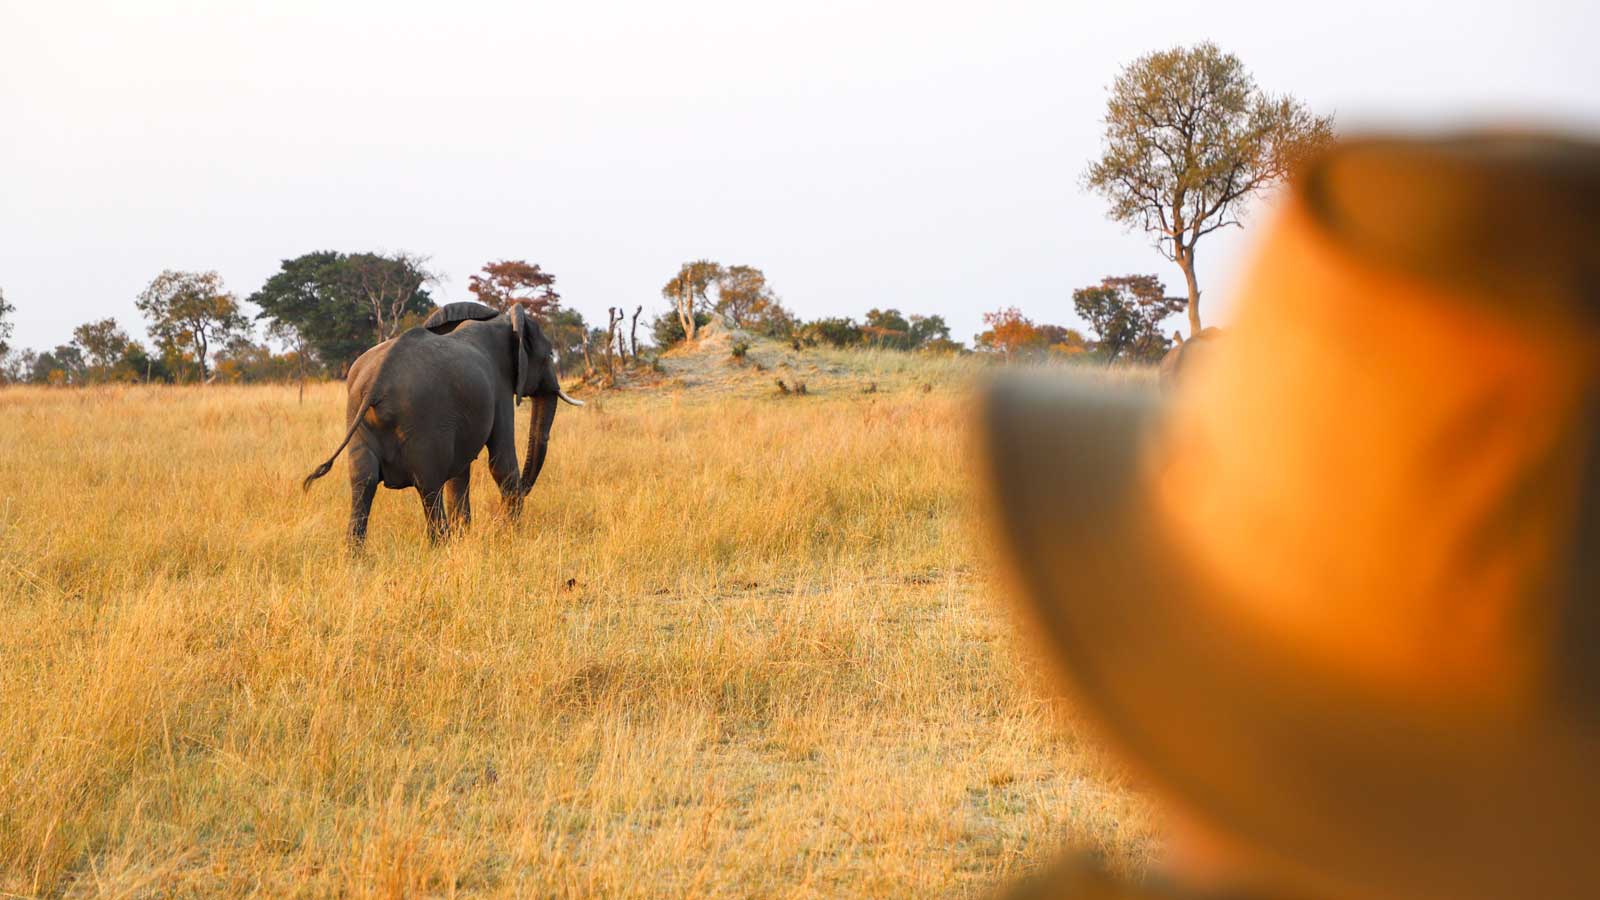 7days-tanzania-selousandruaha-luxury-honeymoon-safari